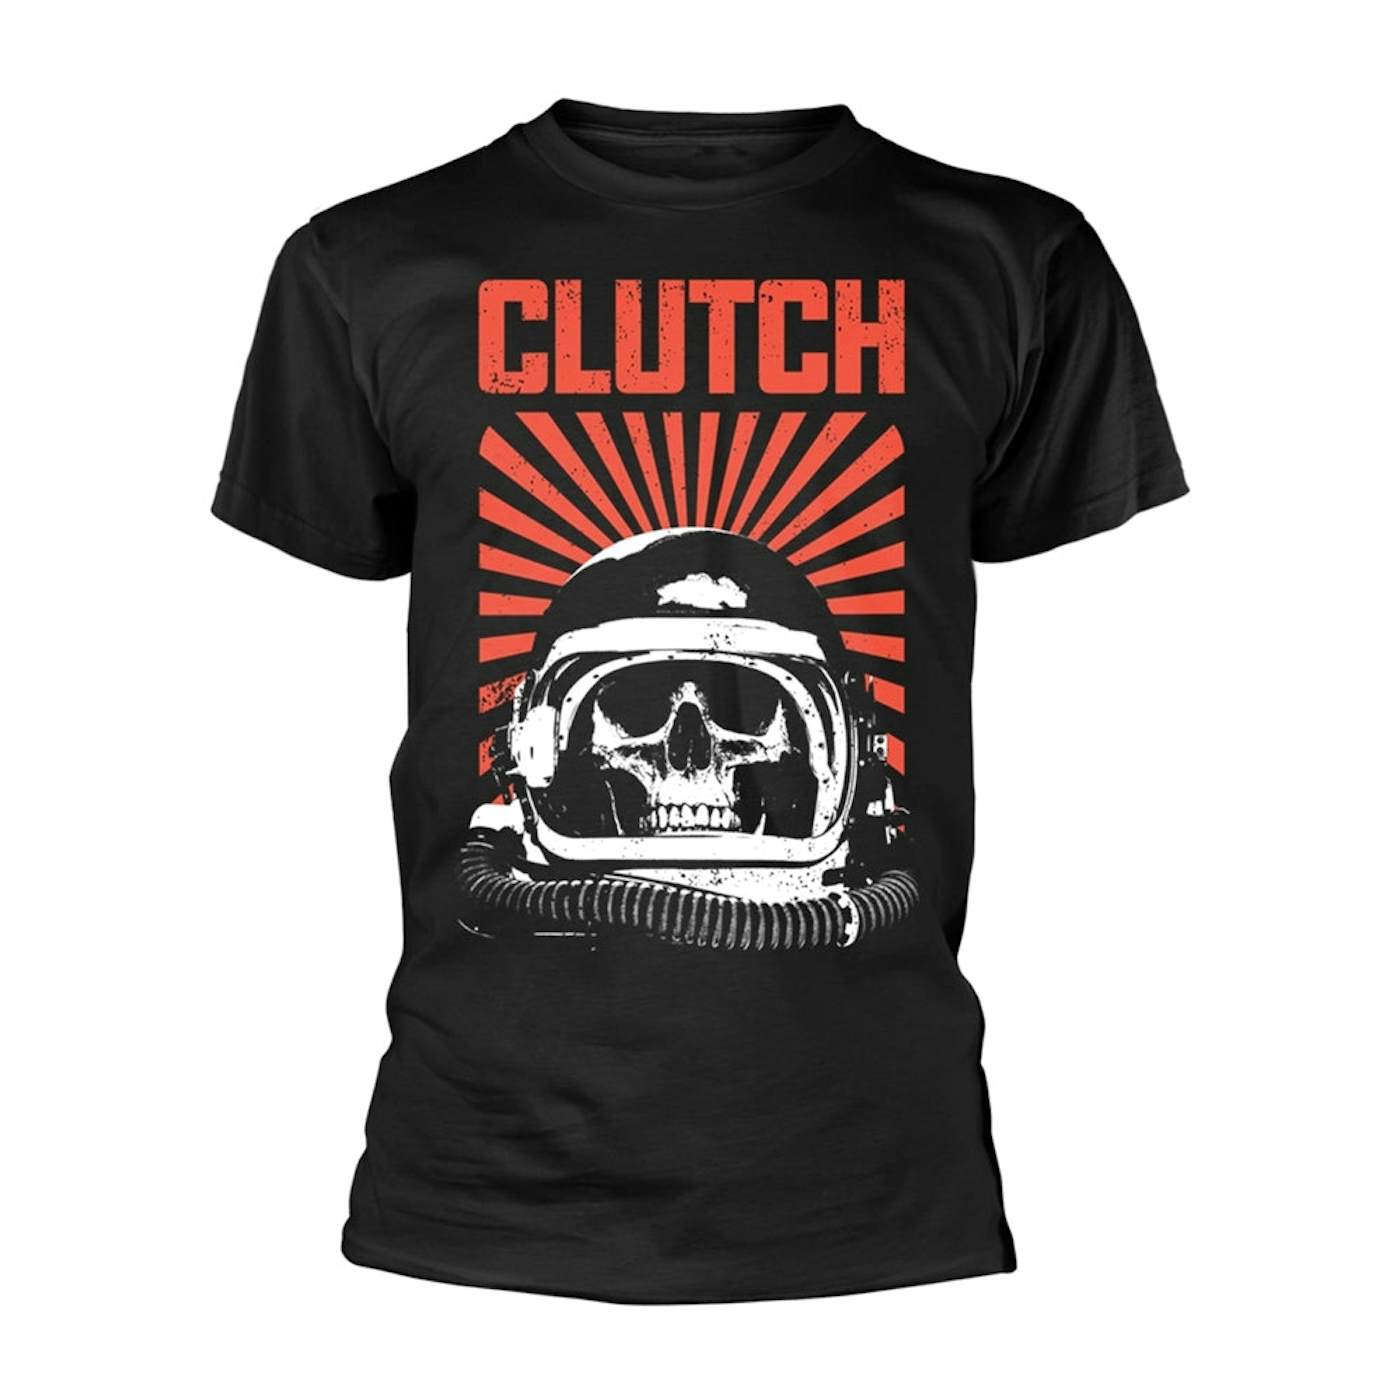 Clutch T Shirt - Go Forth Ad Infinitum Xxii Tour